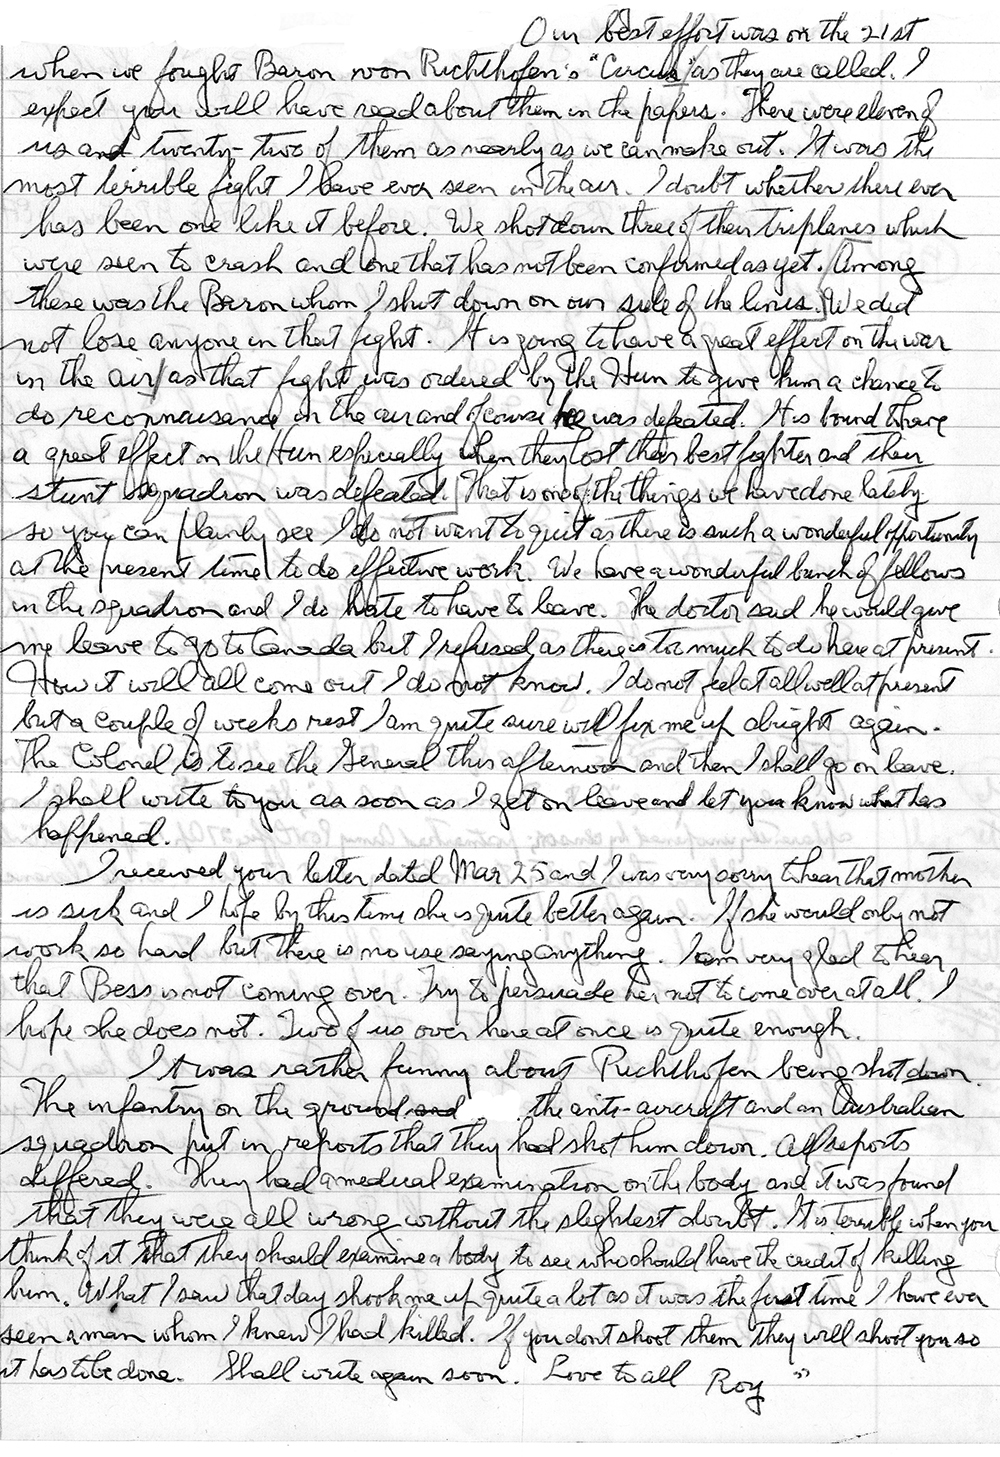 Photocopy of handwritten letter.